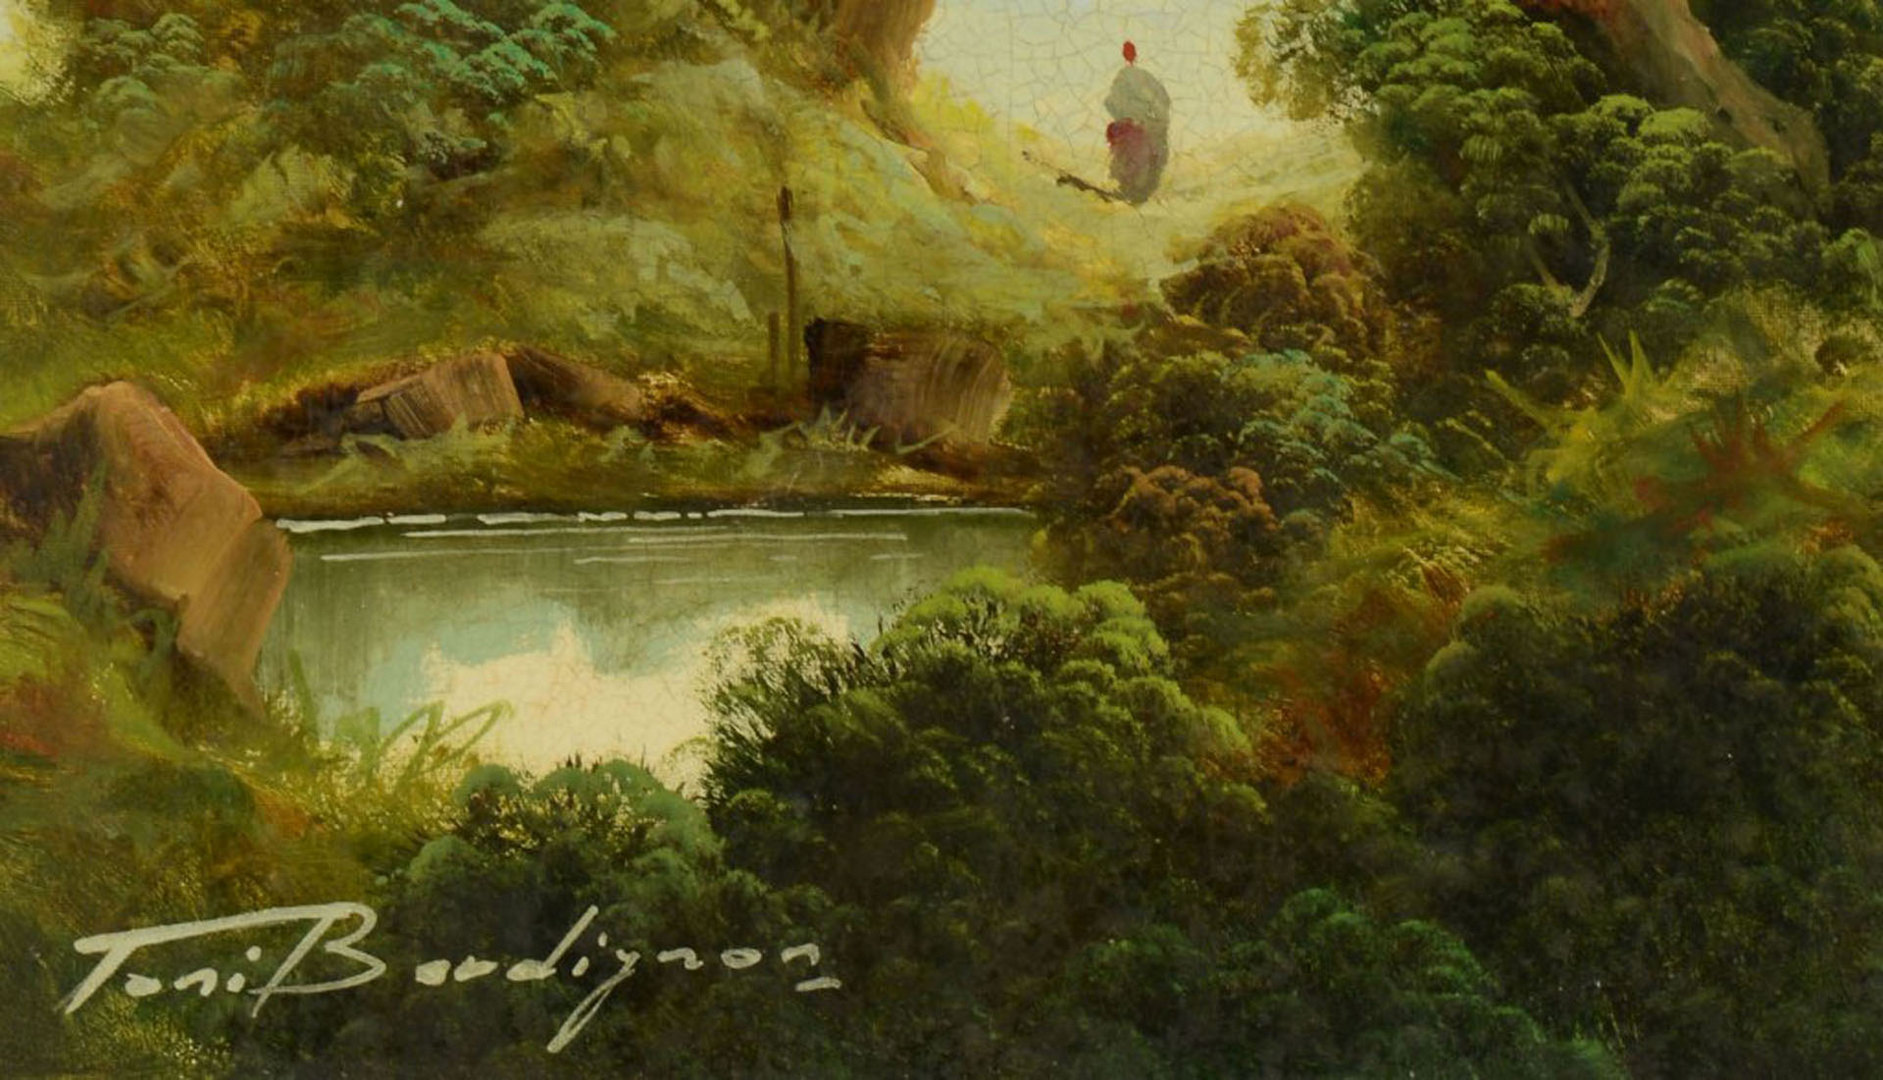 Lot 354: Pair of Toni Bordignon Oil on Canvas Landscapes